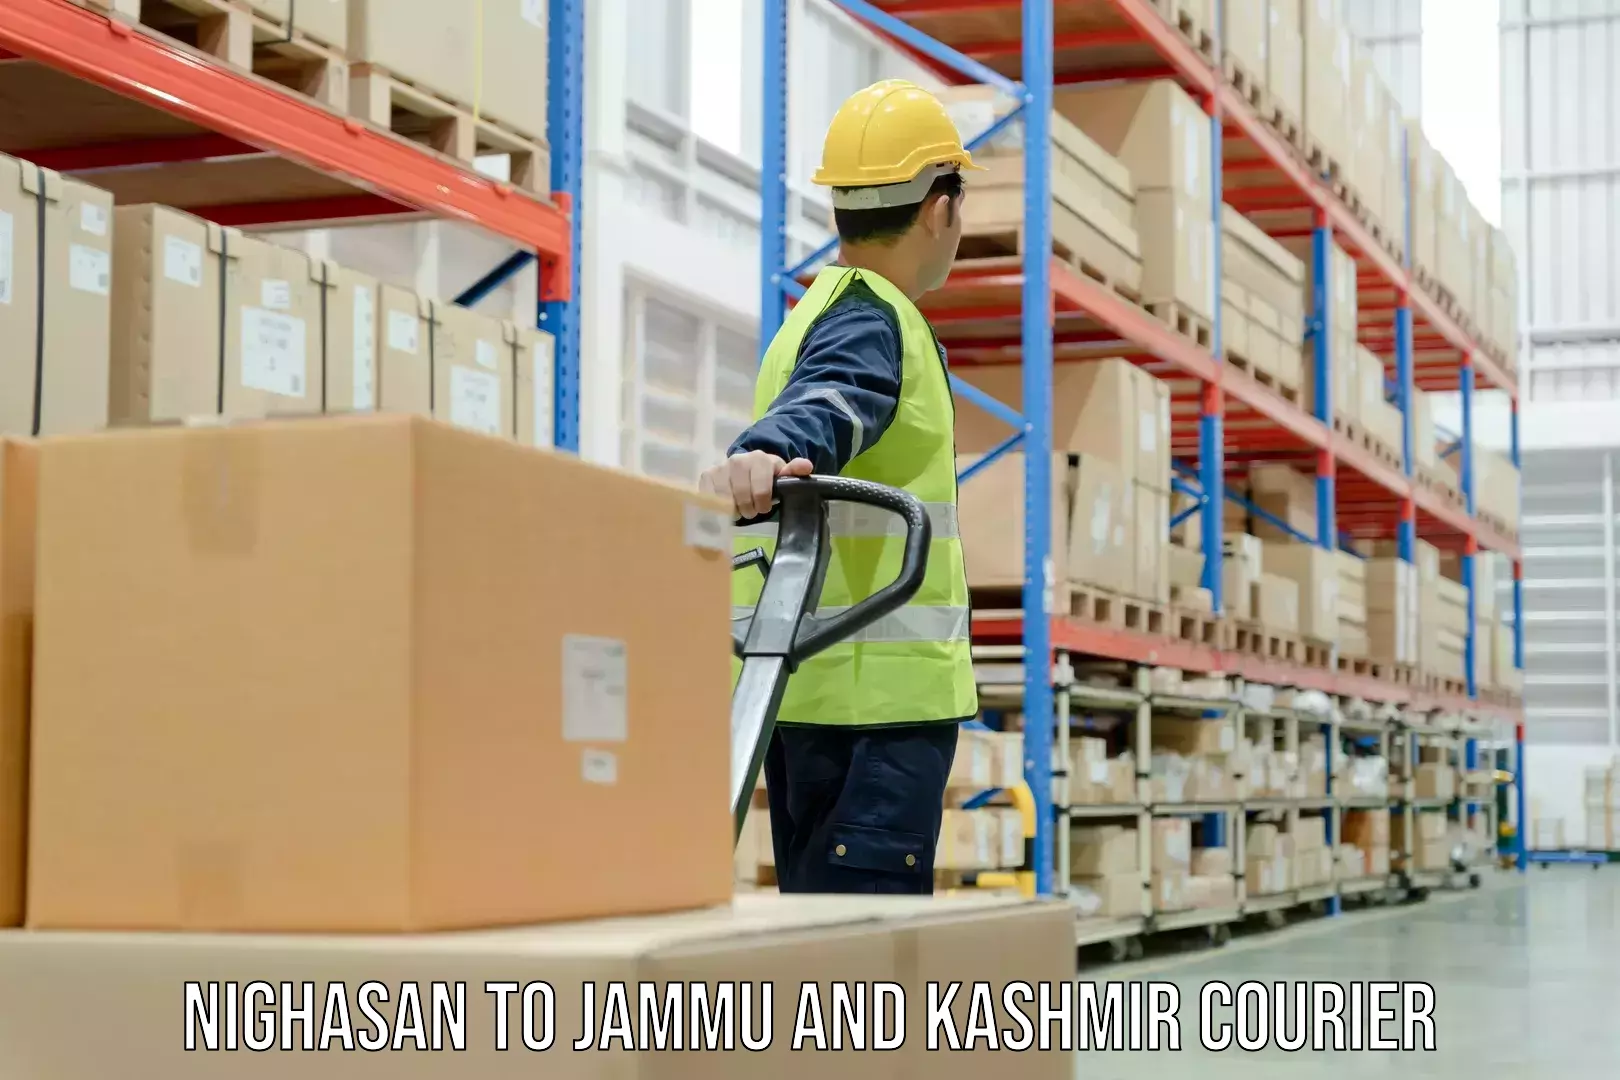 Courier service comparison in Nighasan to Jammu